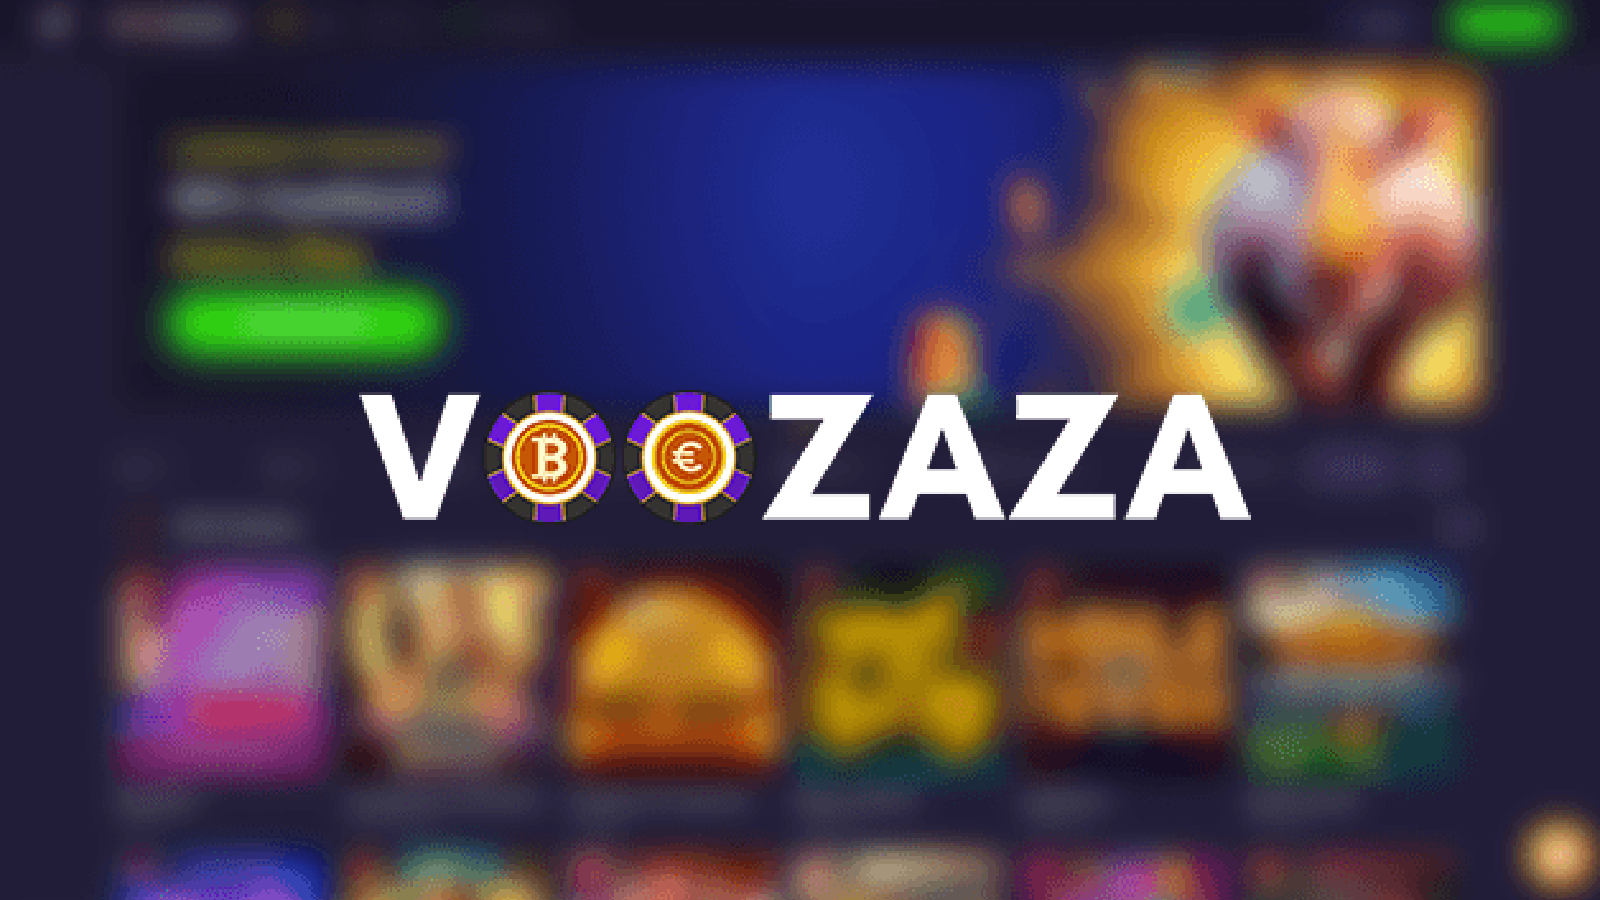 VooZaZa Casino Review